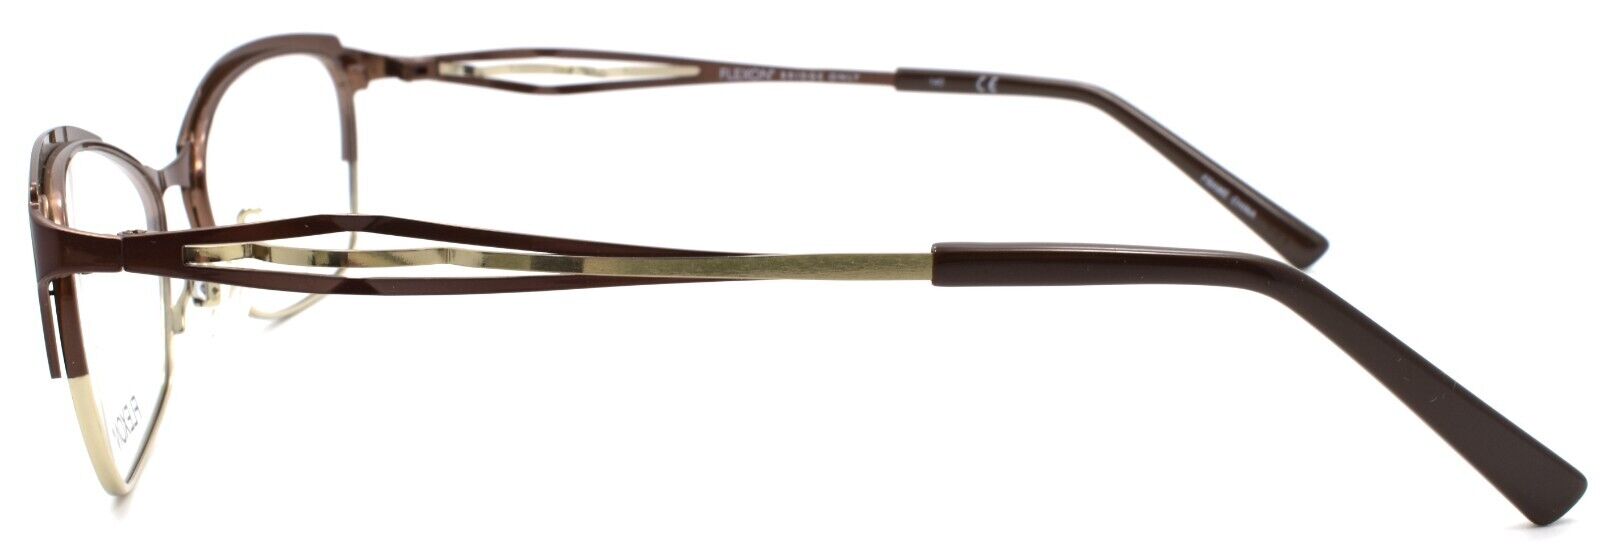 3-Flexon W3000 210 Women's Eyeglasses Frames Brown 53-17-135 Titanium Bridge-883900202862-IKSpecs